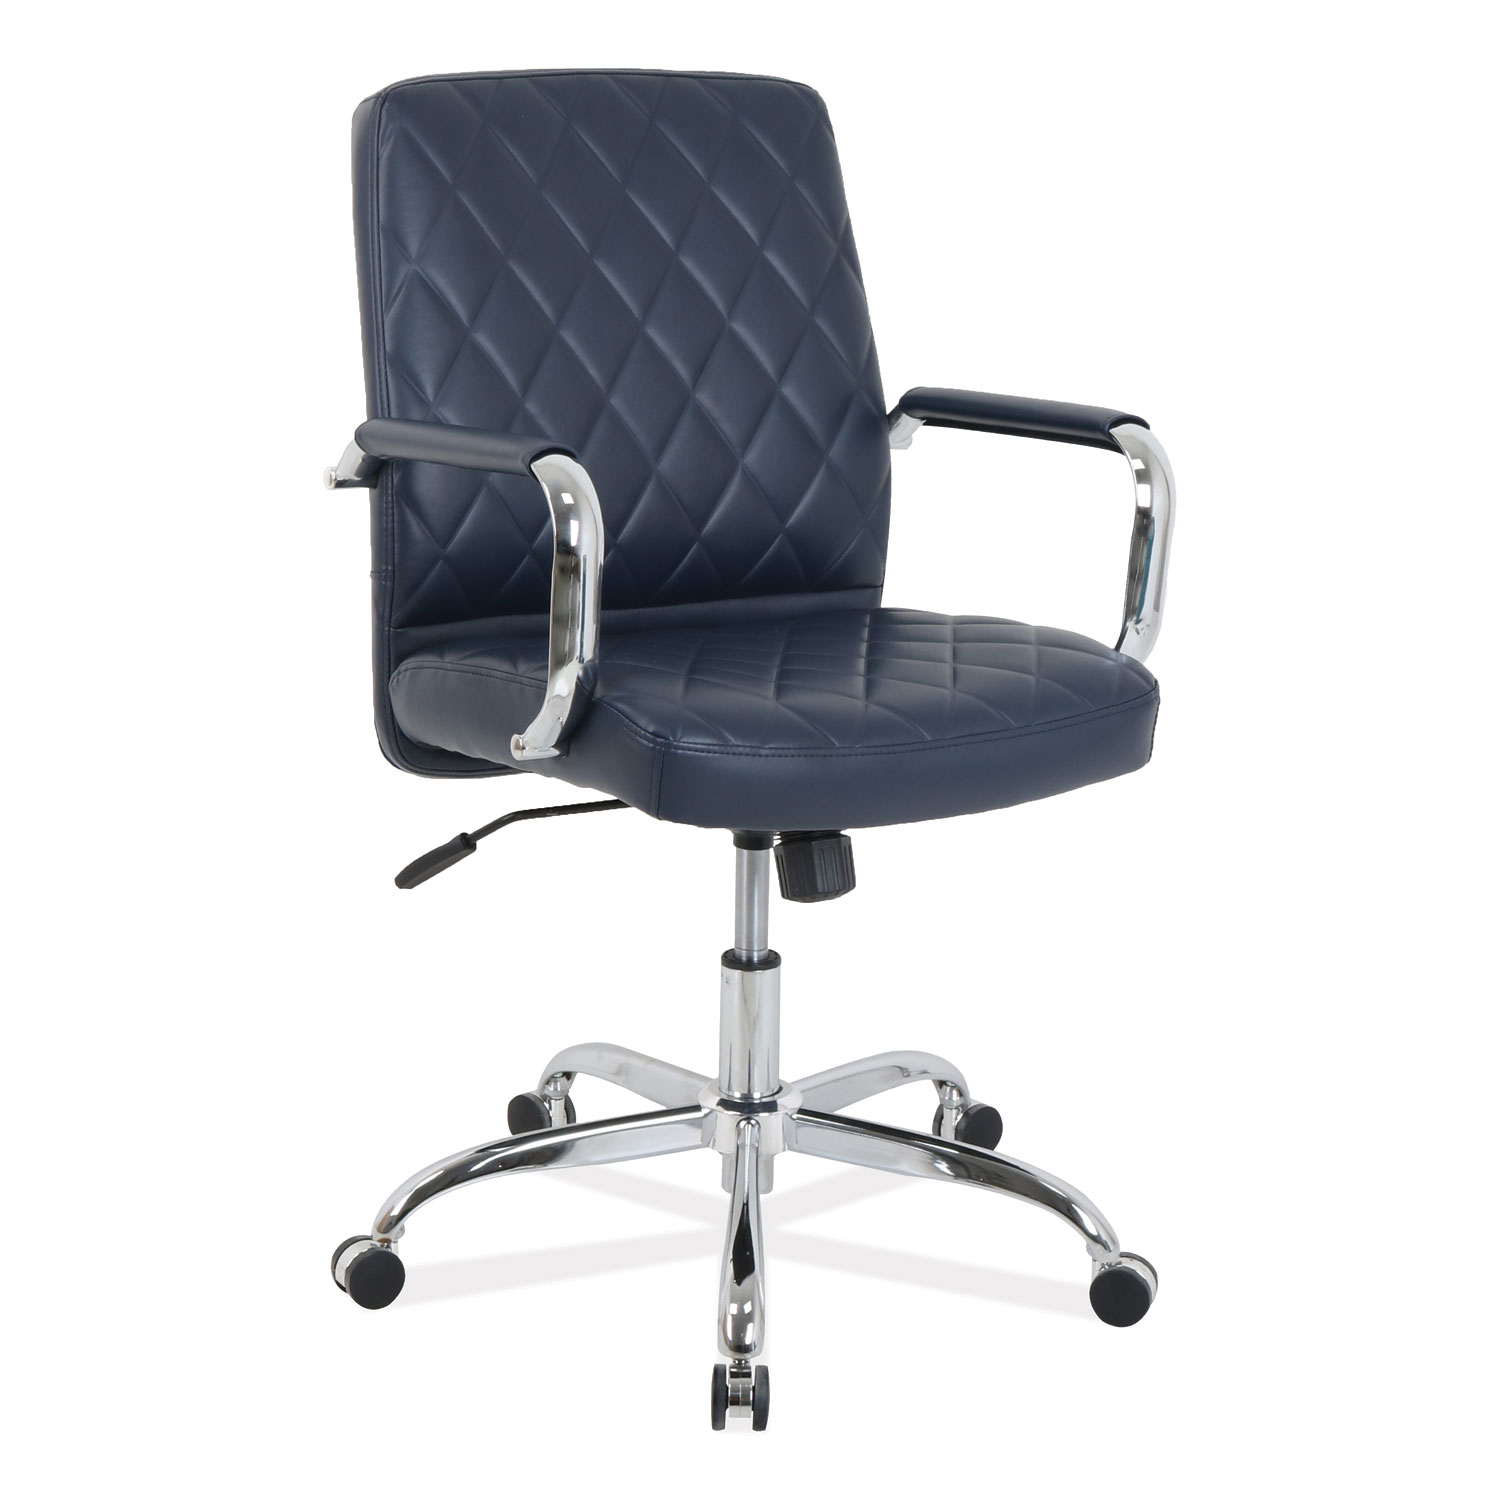  kathy ireland OFFICE by Alera KA54229 kathy ireland OFFICE by Alera Nebulous Mid-Back Diamond-Embossed Leather Chair, Up to 275 lbs., Navy Blue Seat, Chrome Base (ALEKA54229) 